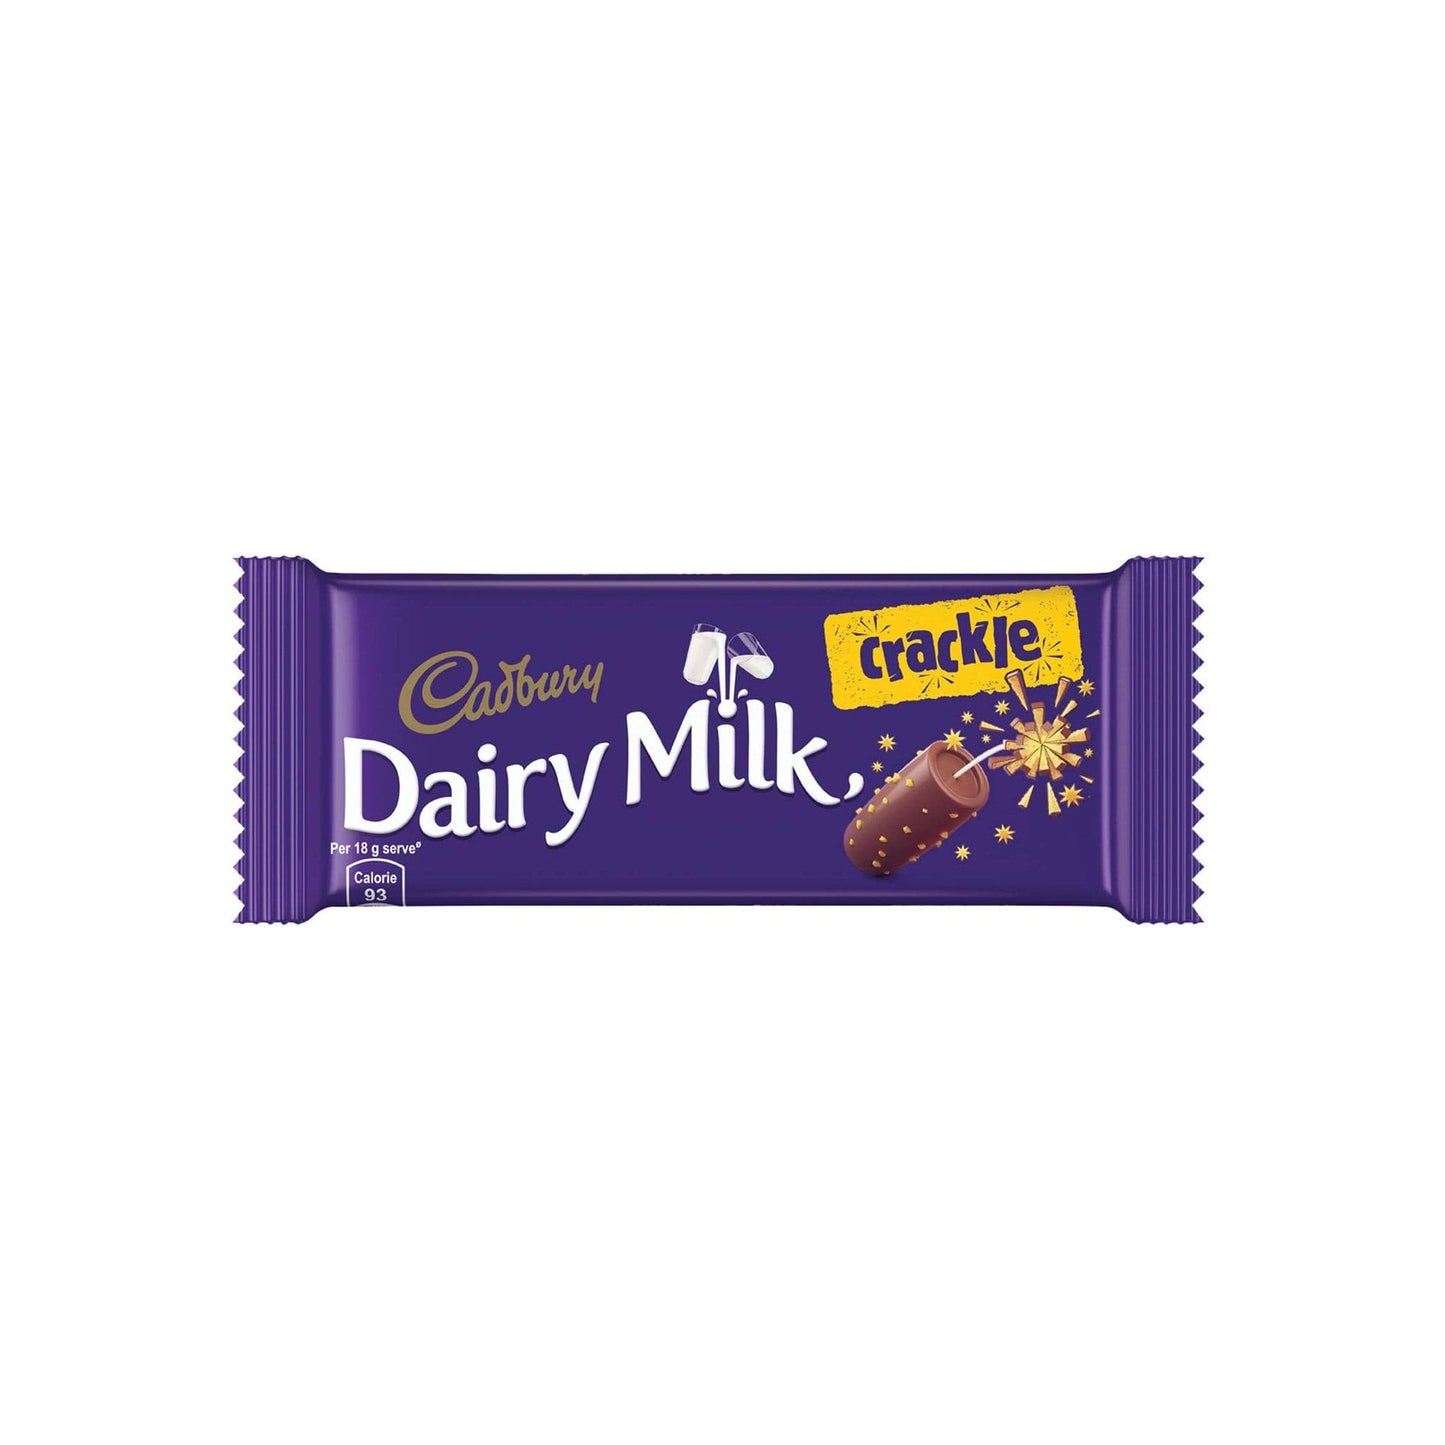 Cadbury DairyMilk Crackle Chocolate.